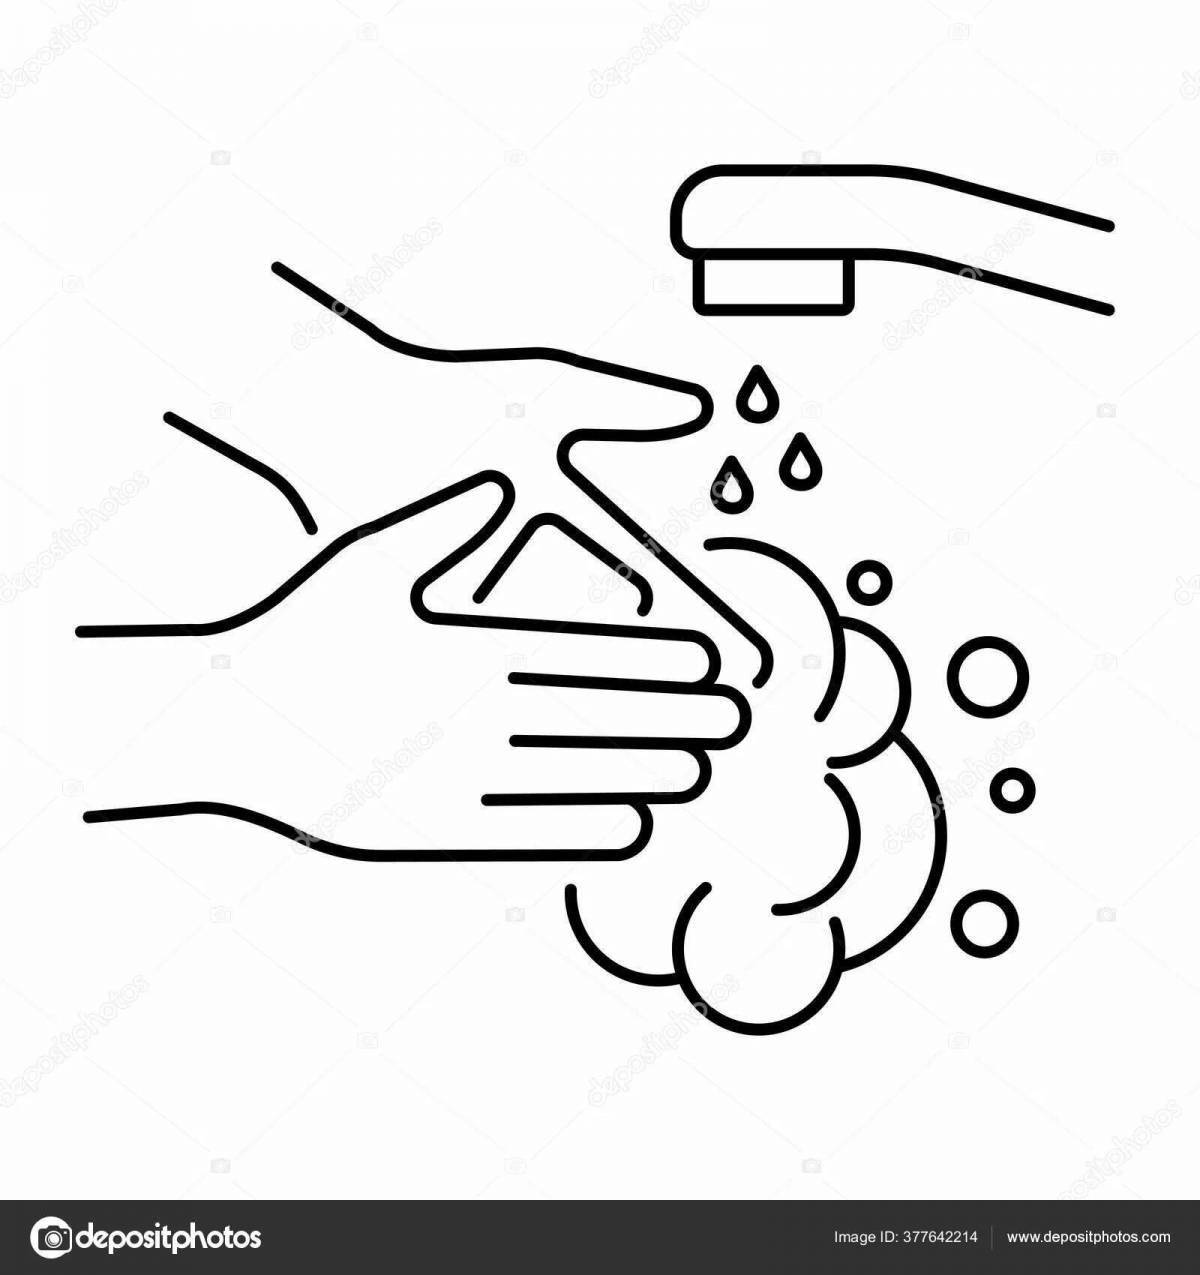 Wash hands #7